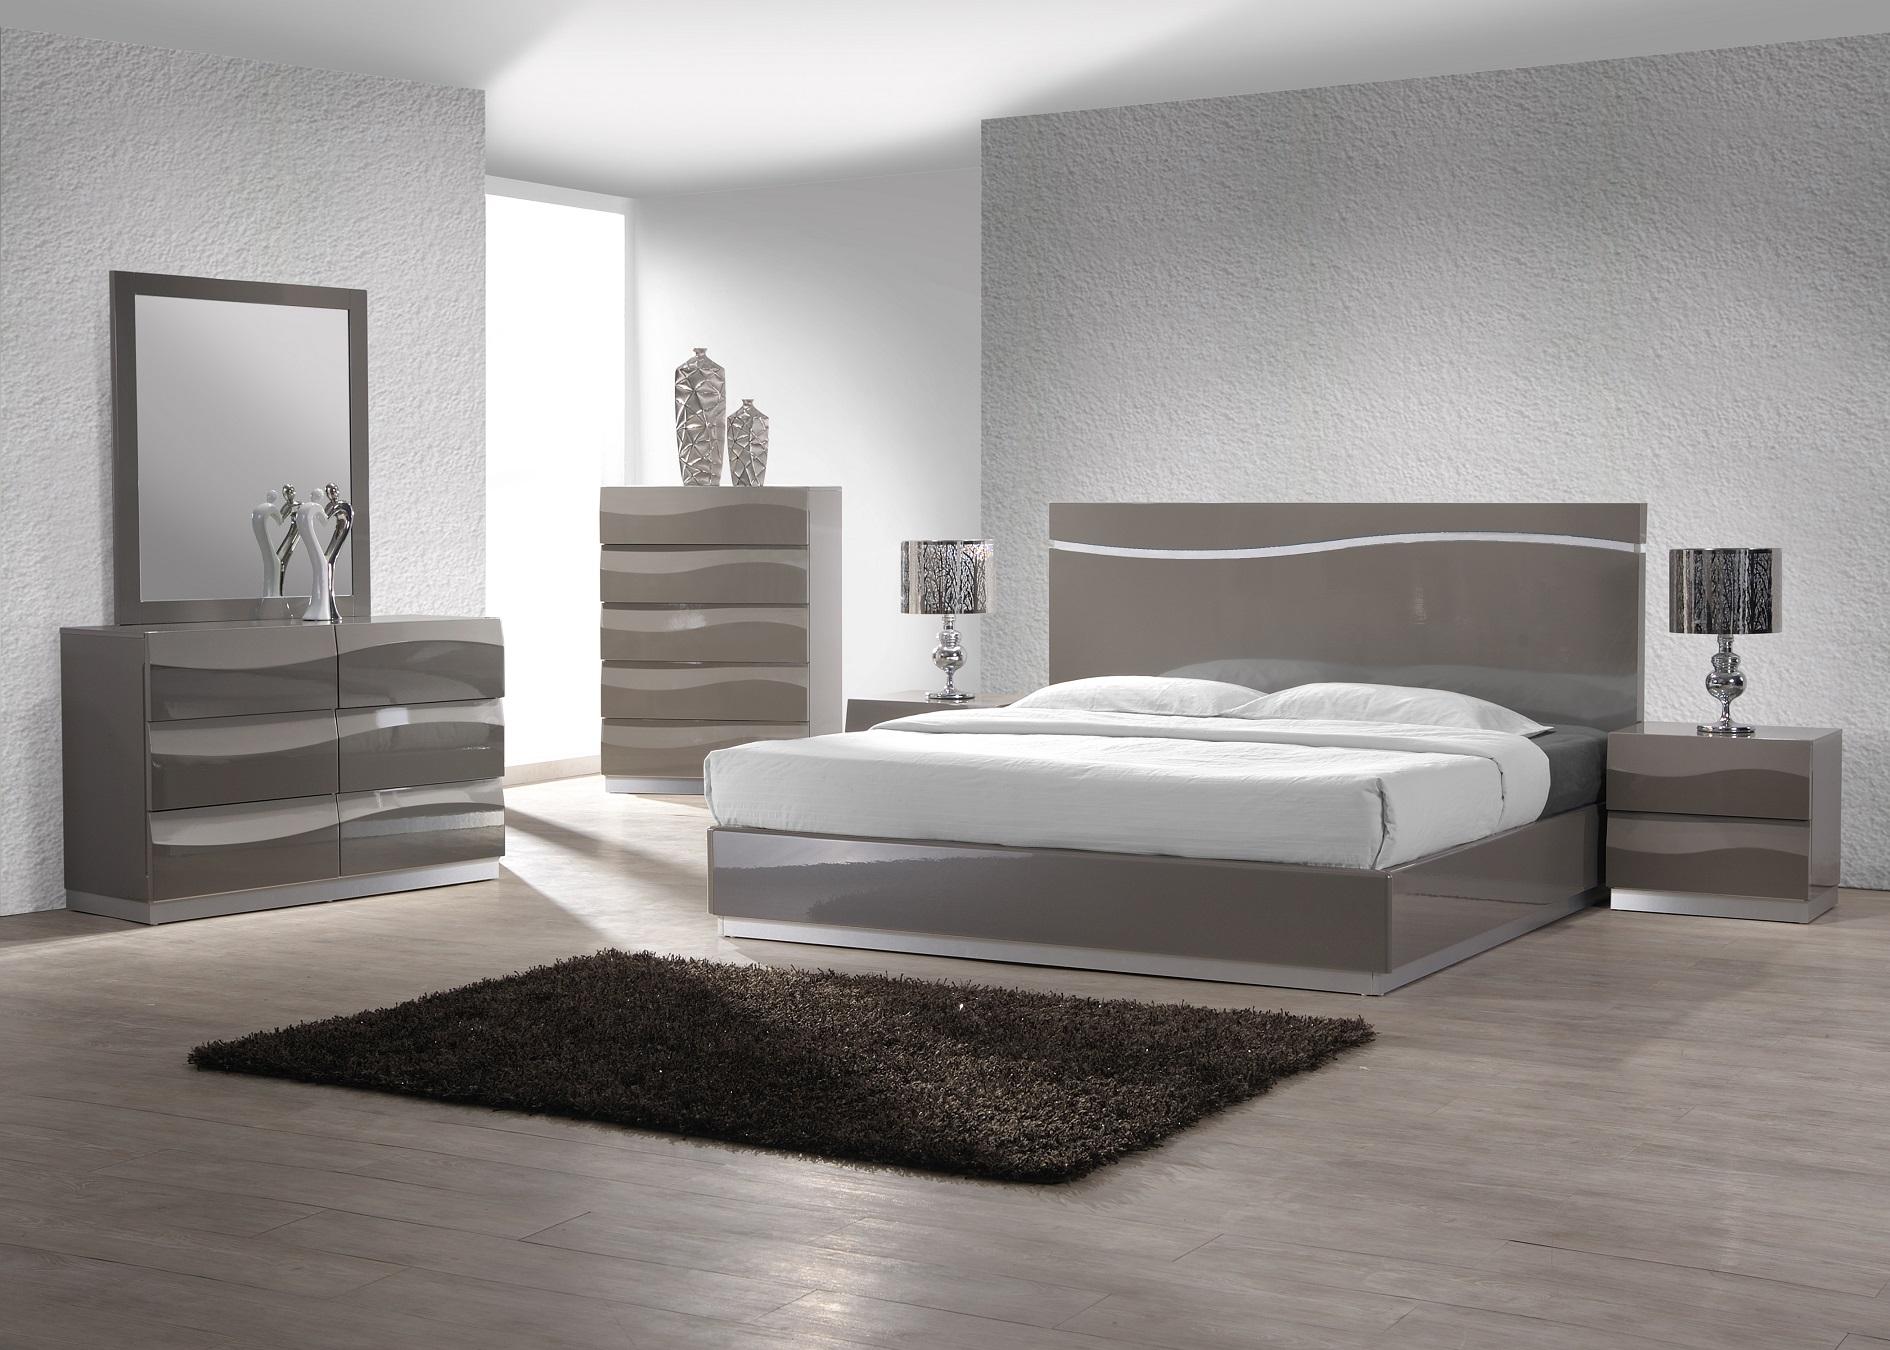 

    
DELHI-QUEEN-2N-3PC Gloss Grey Finish Platform Queen Size Bedroom Set 3Pcs Delhi by Chintaly Imports
